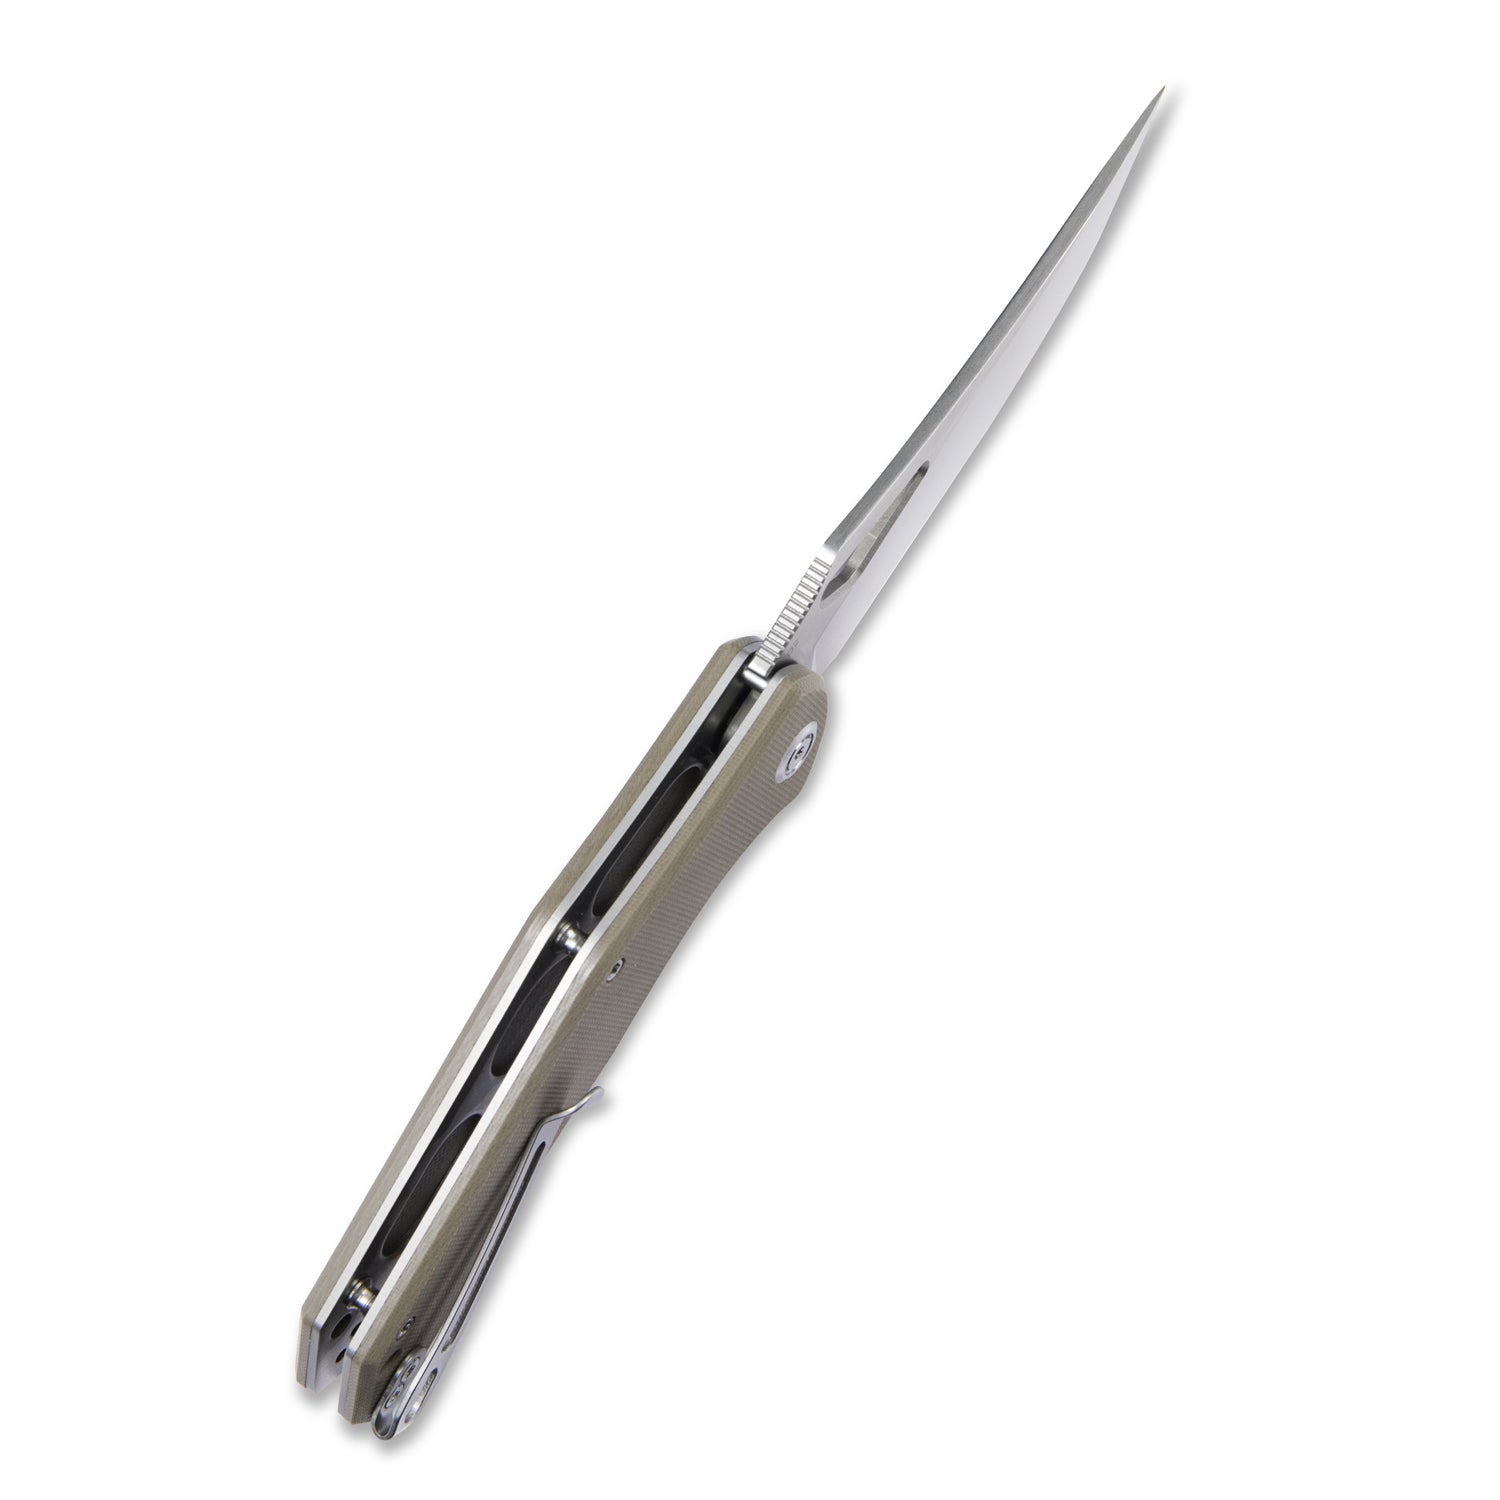 Kubey Phemius Liner Lock Folding Pocket Knife Tan G10 Handle 3.66" Bead Blasted D2 KU149B